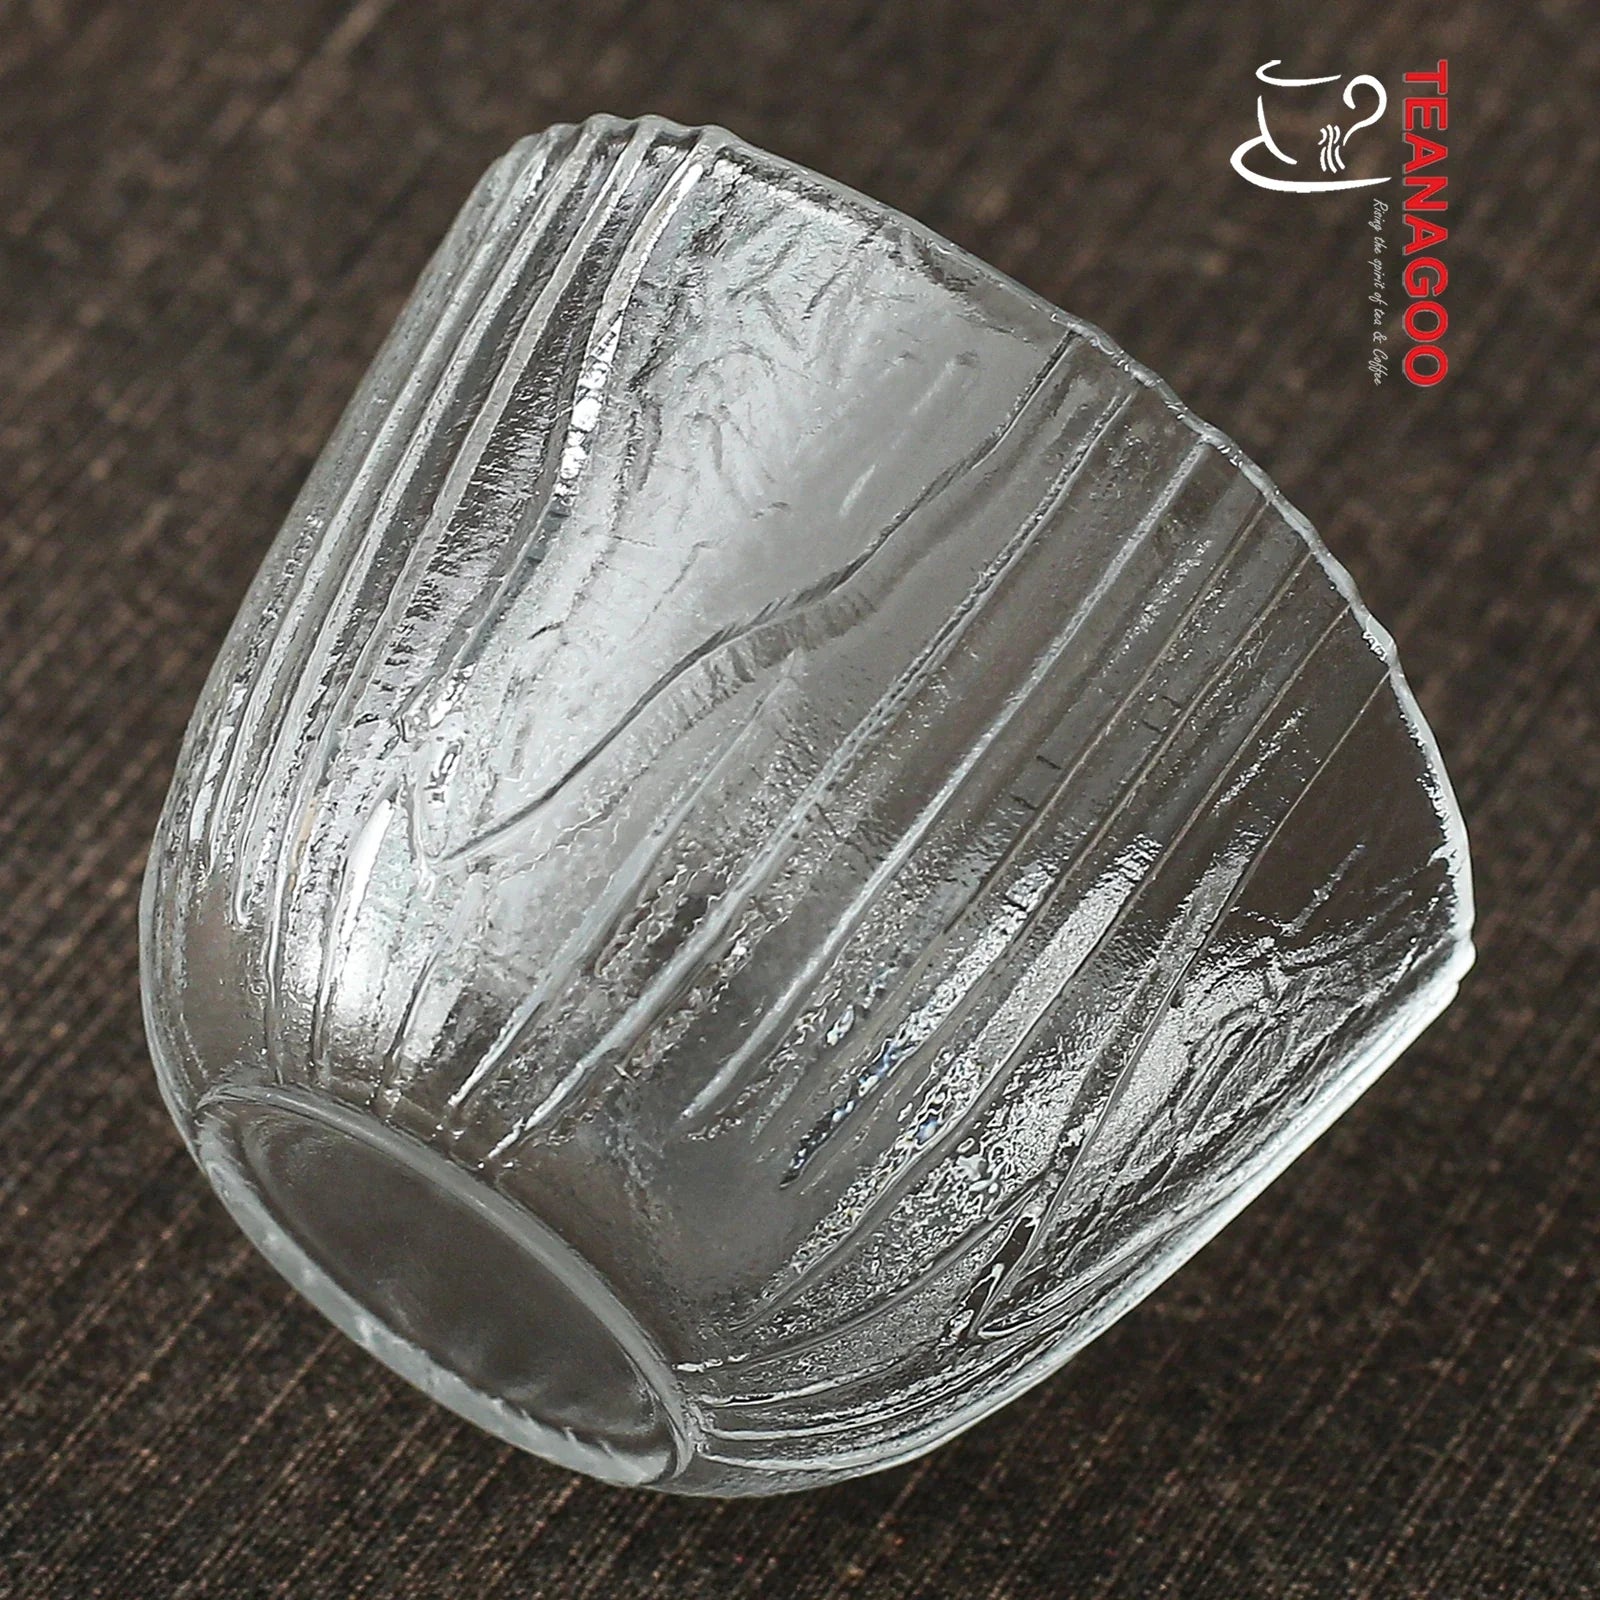 Handmade Thicken Asymmetrical Hammered Glass Teacup 75ml